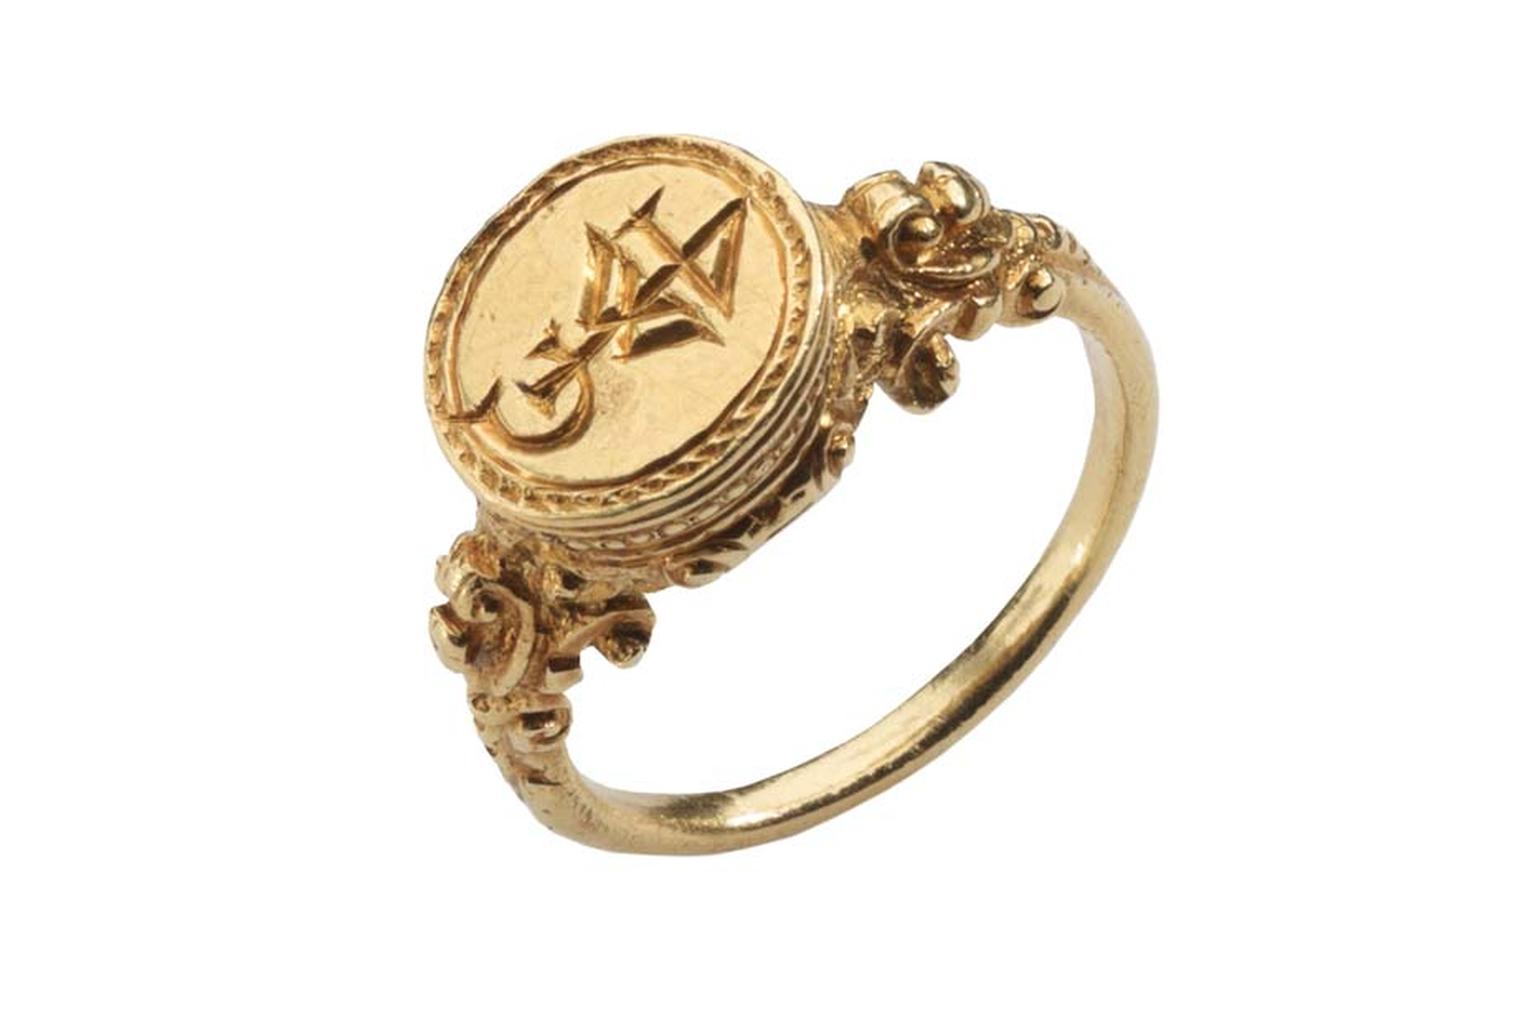 Les Enluminures gold signet ring.